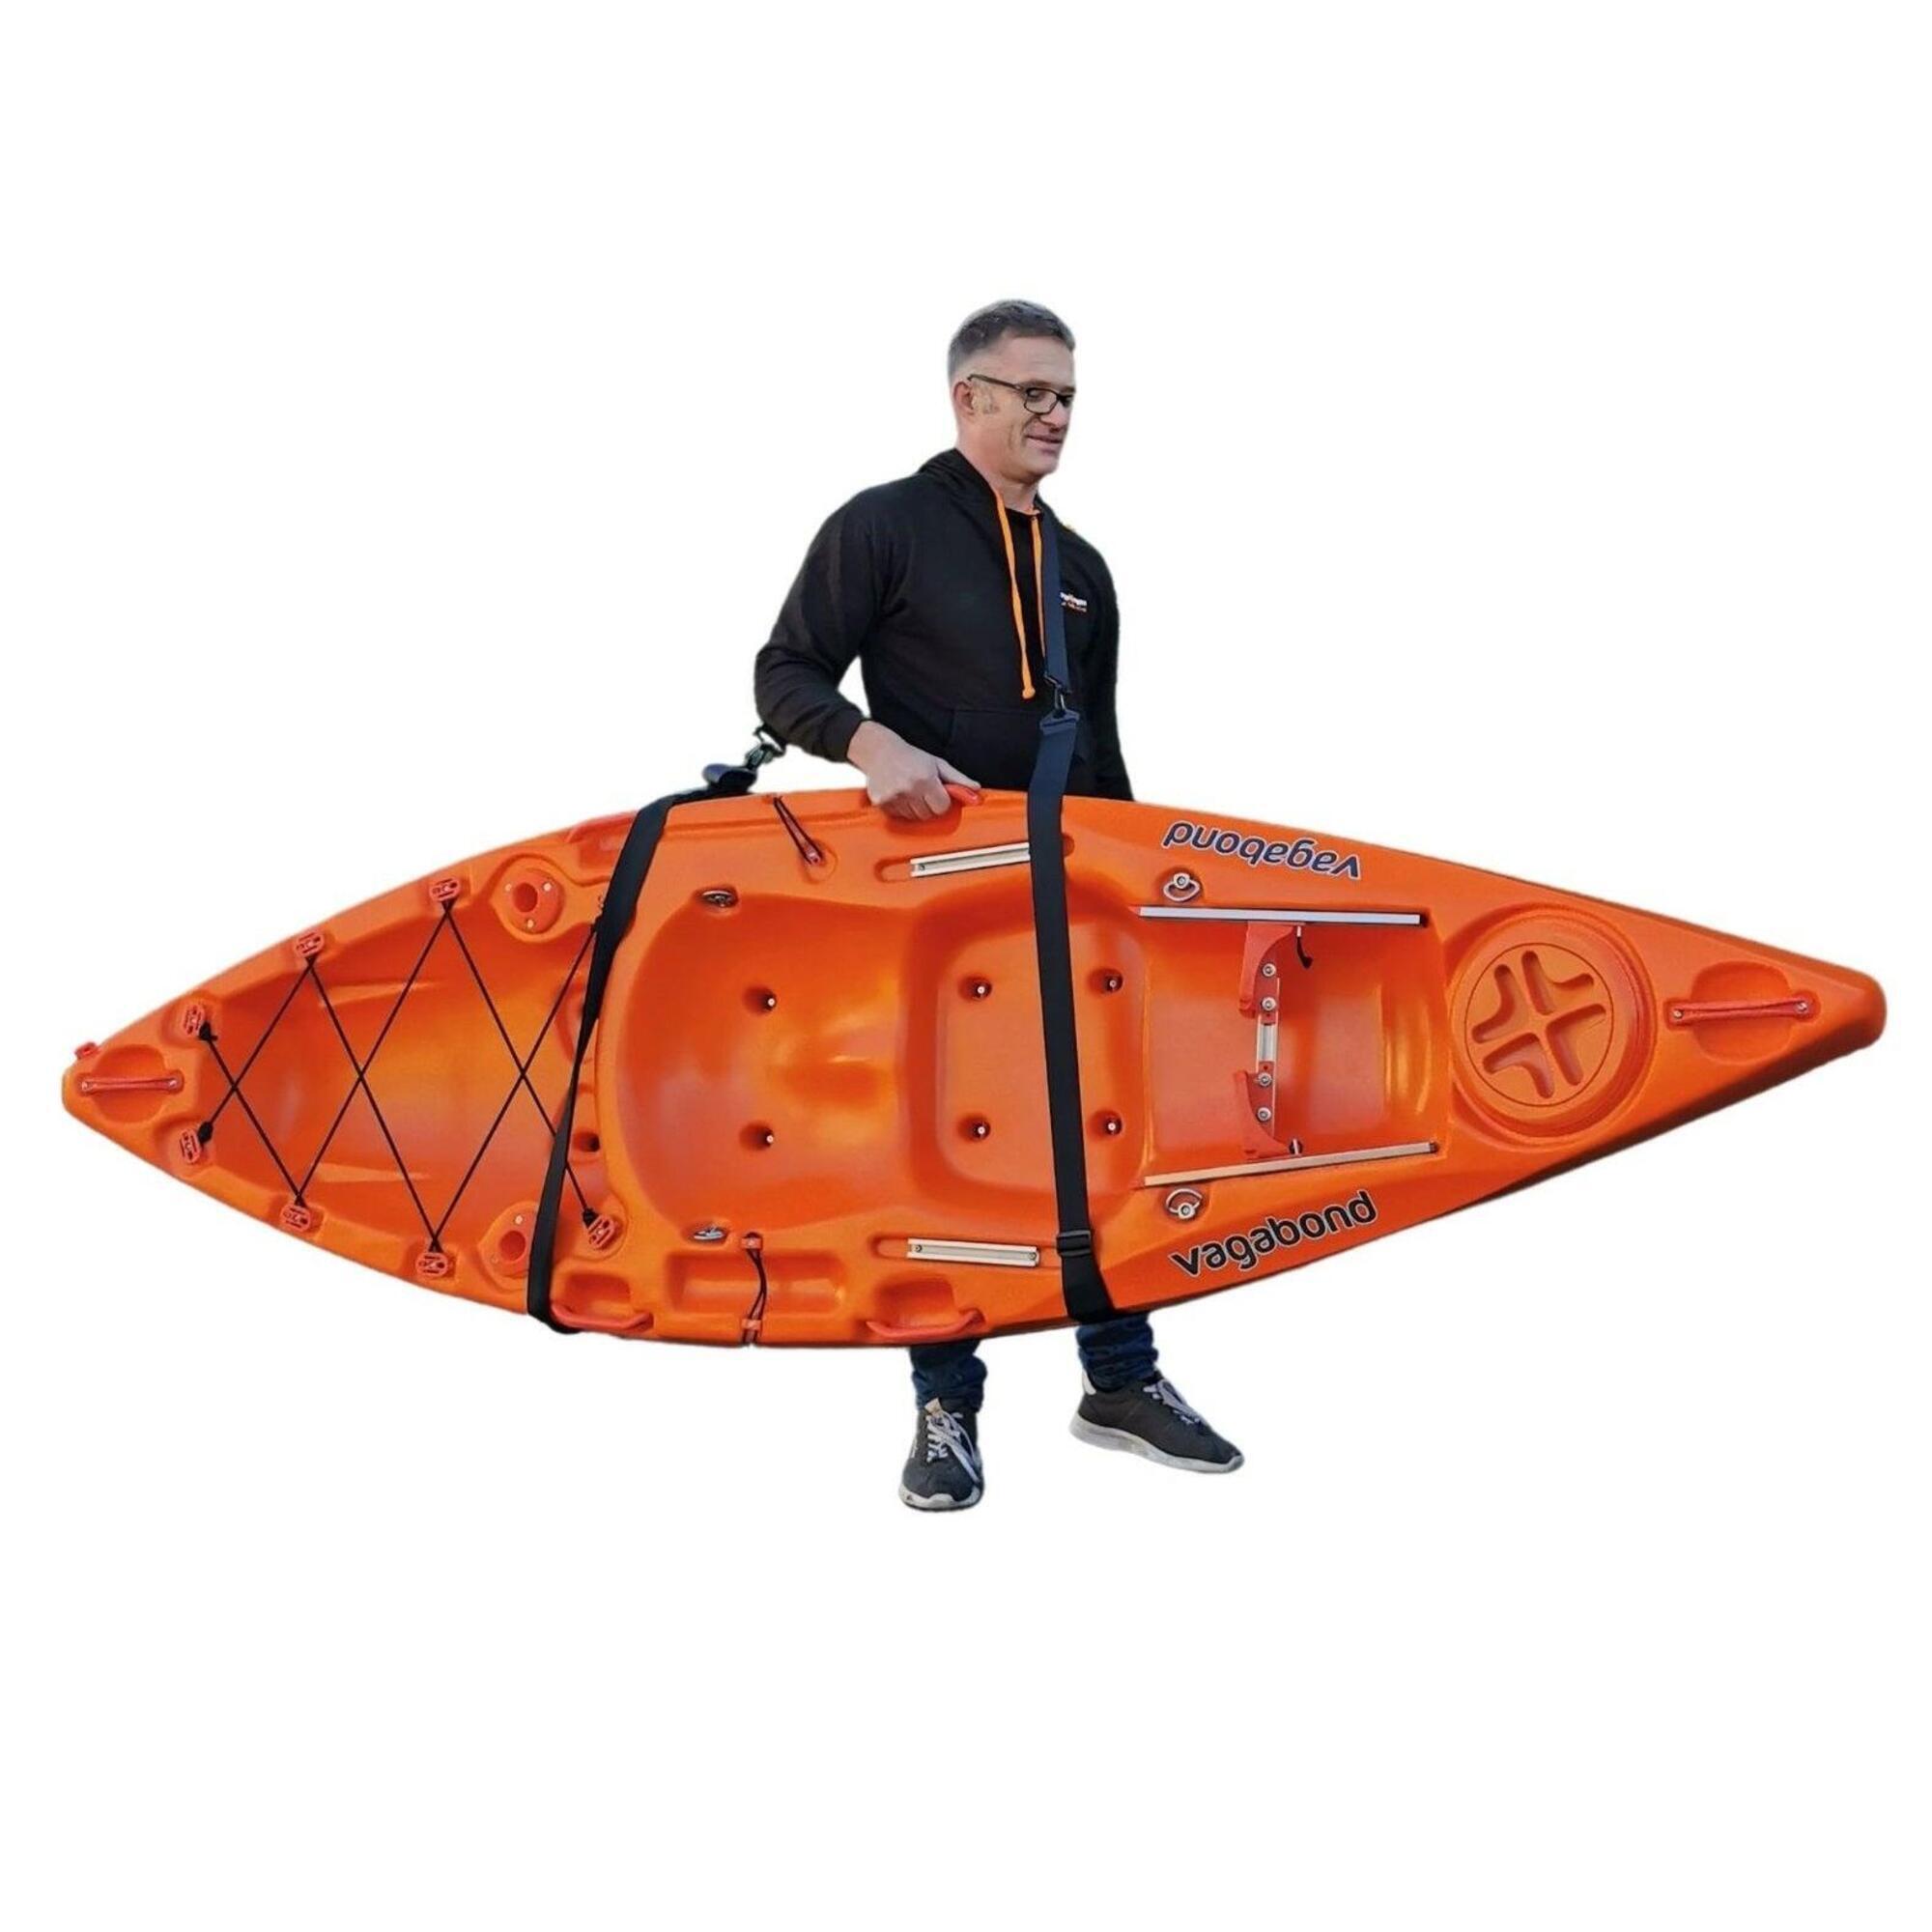 Cambridge Kayaks Adjustable kayak Carry Strap 1/2